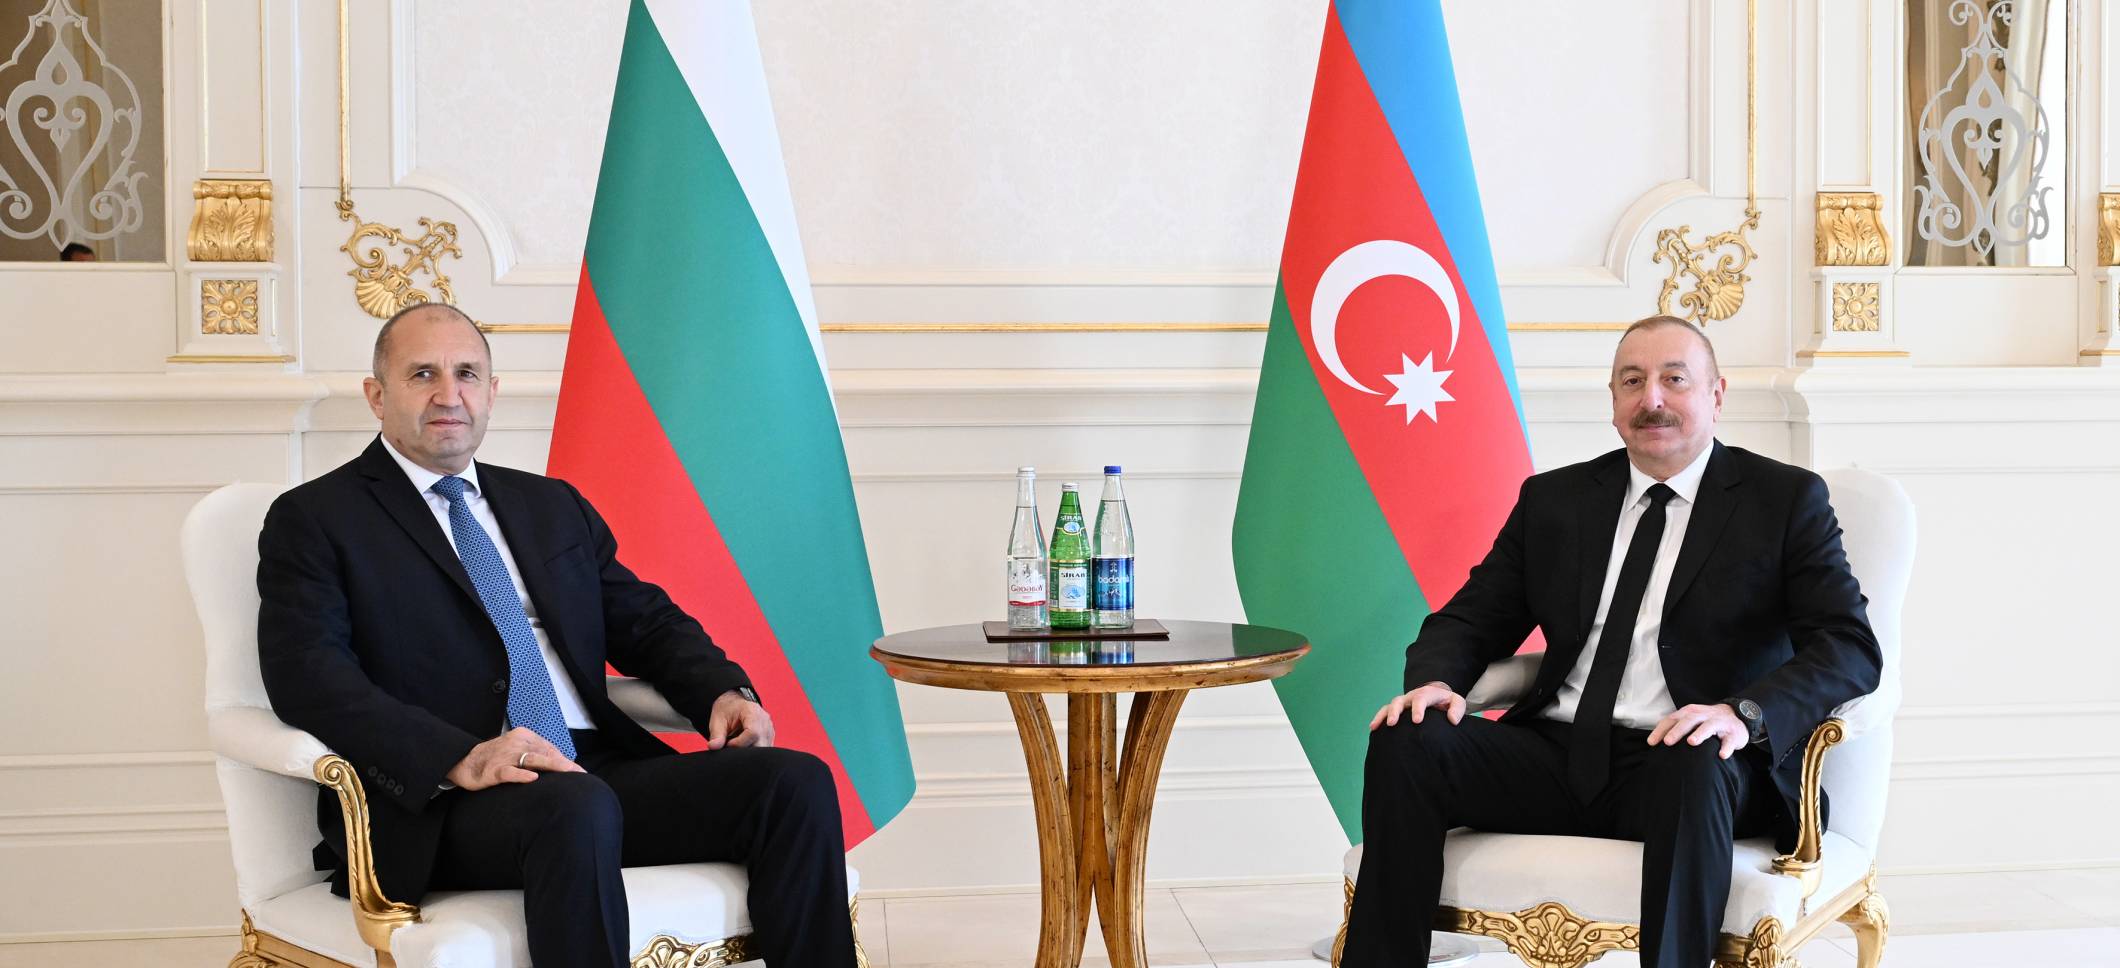 Ilham Aliyev’s one-on-one meeting with President of Bulgaria Rumen Radev started